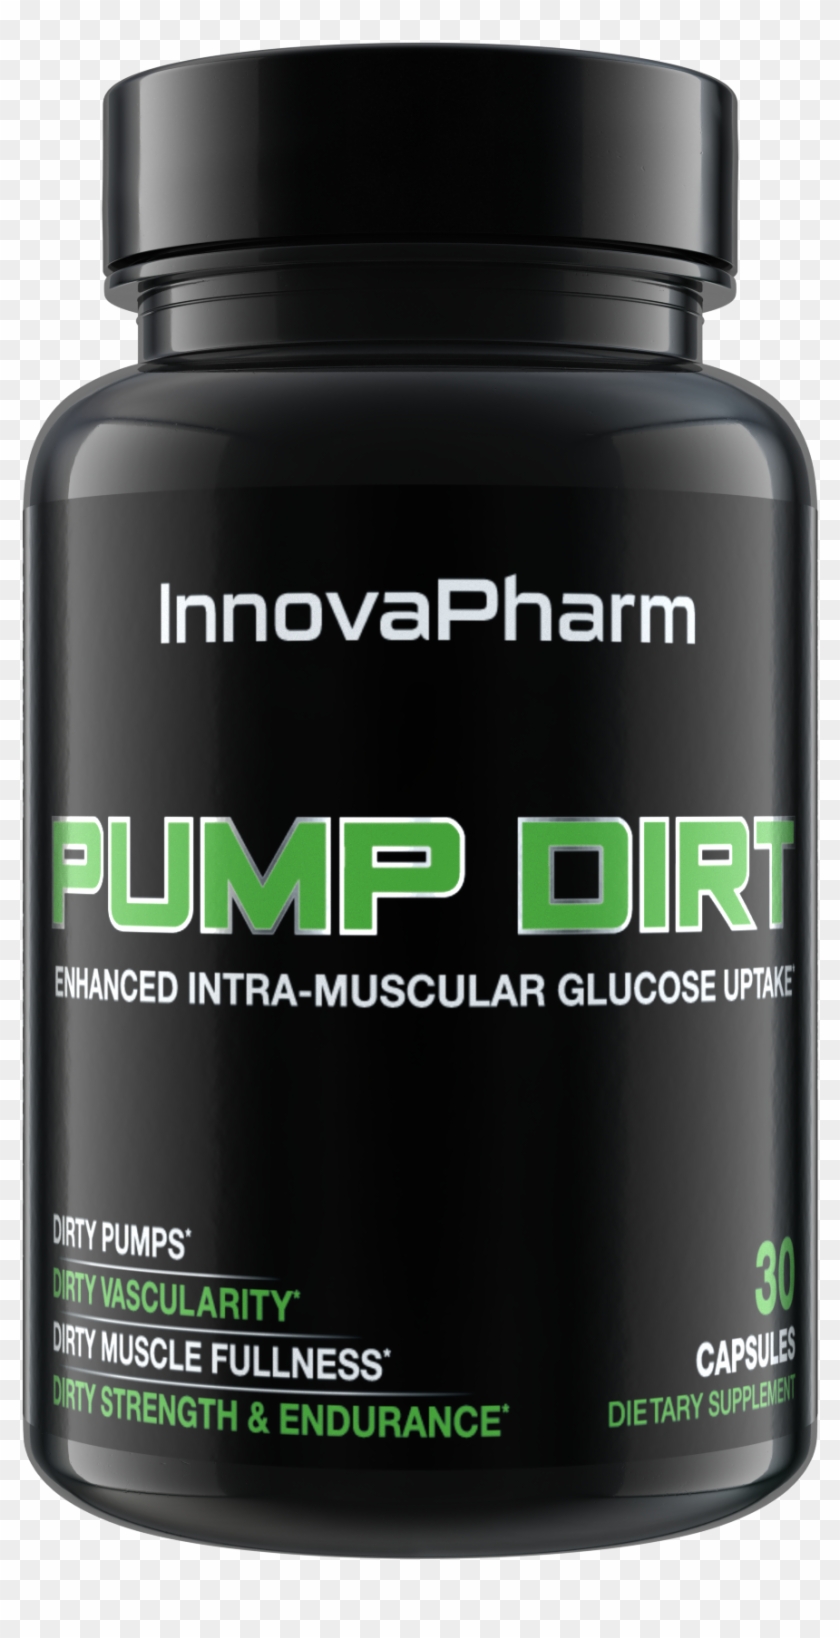 Pump Dirt Caps - Bodybuilding Supplement Clipart